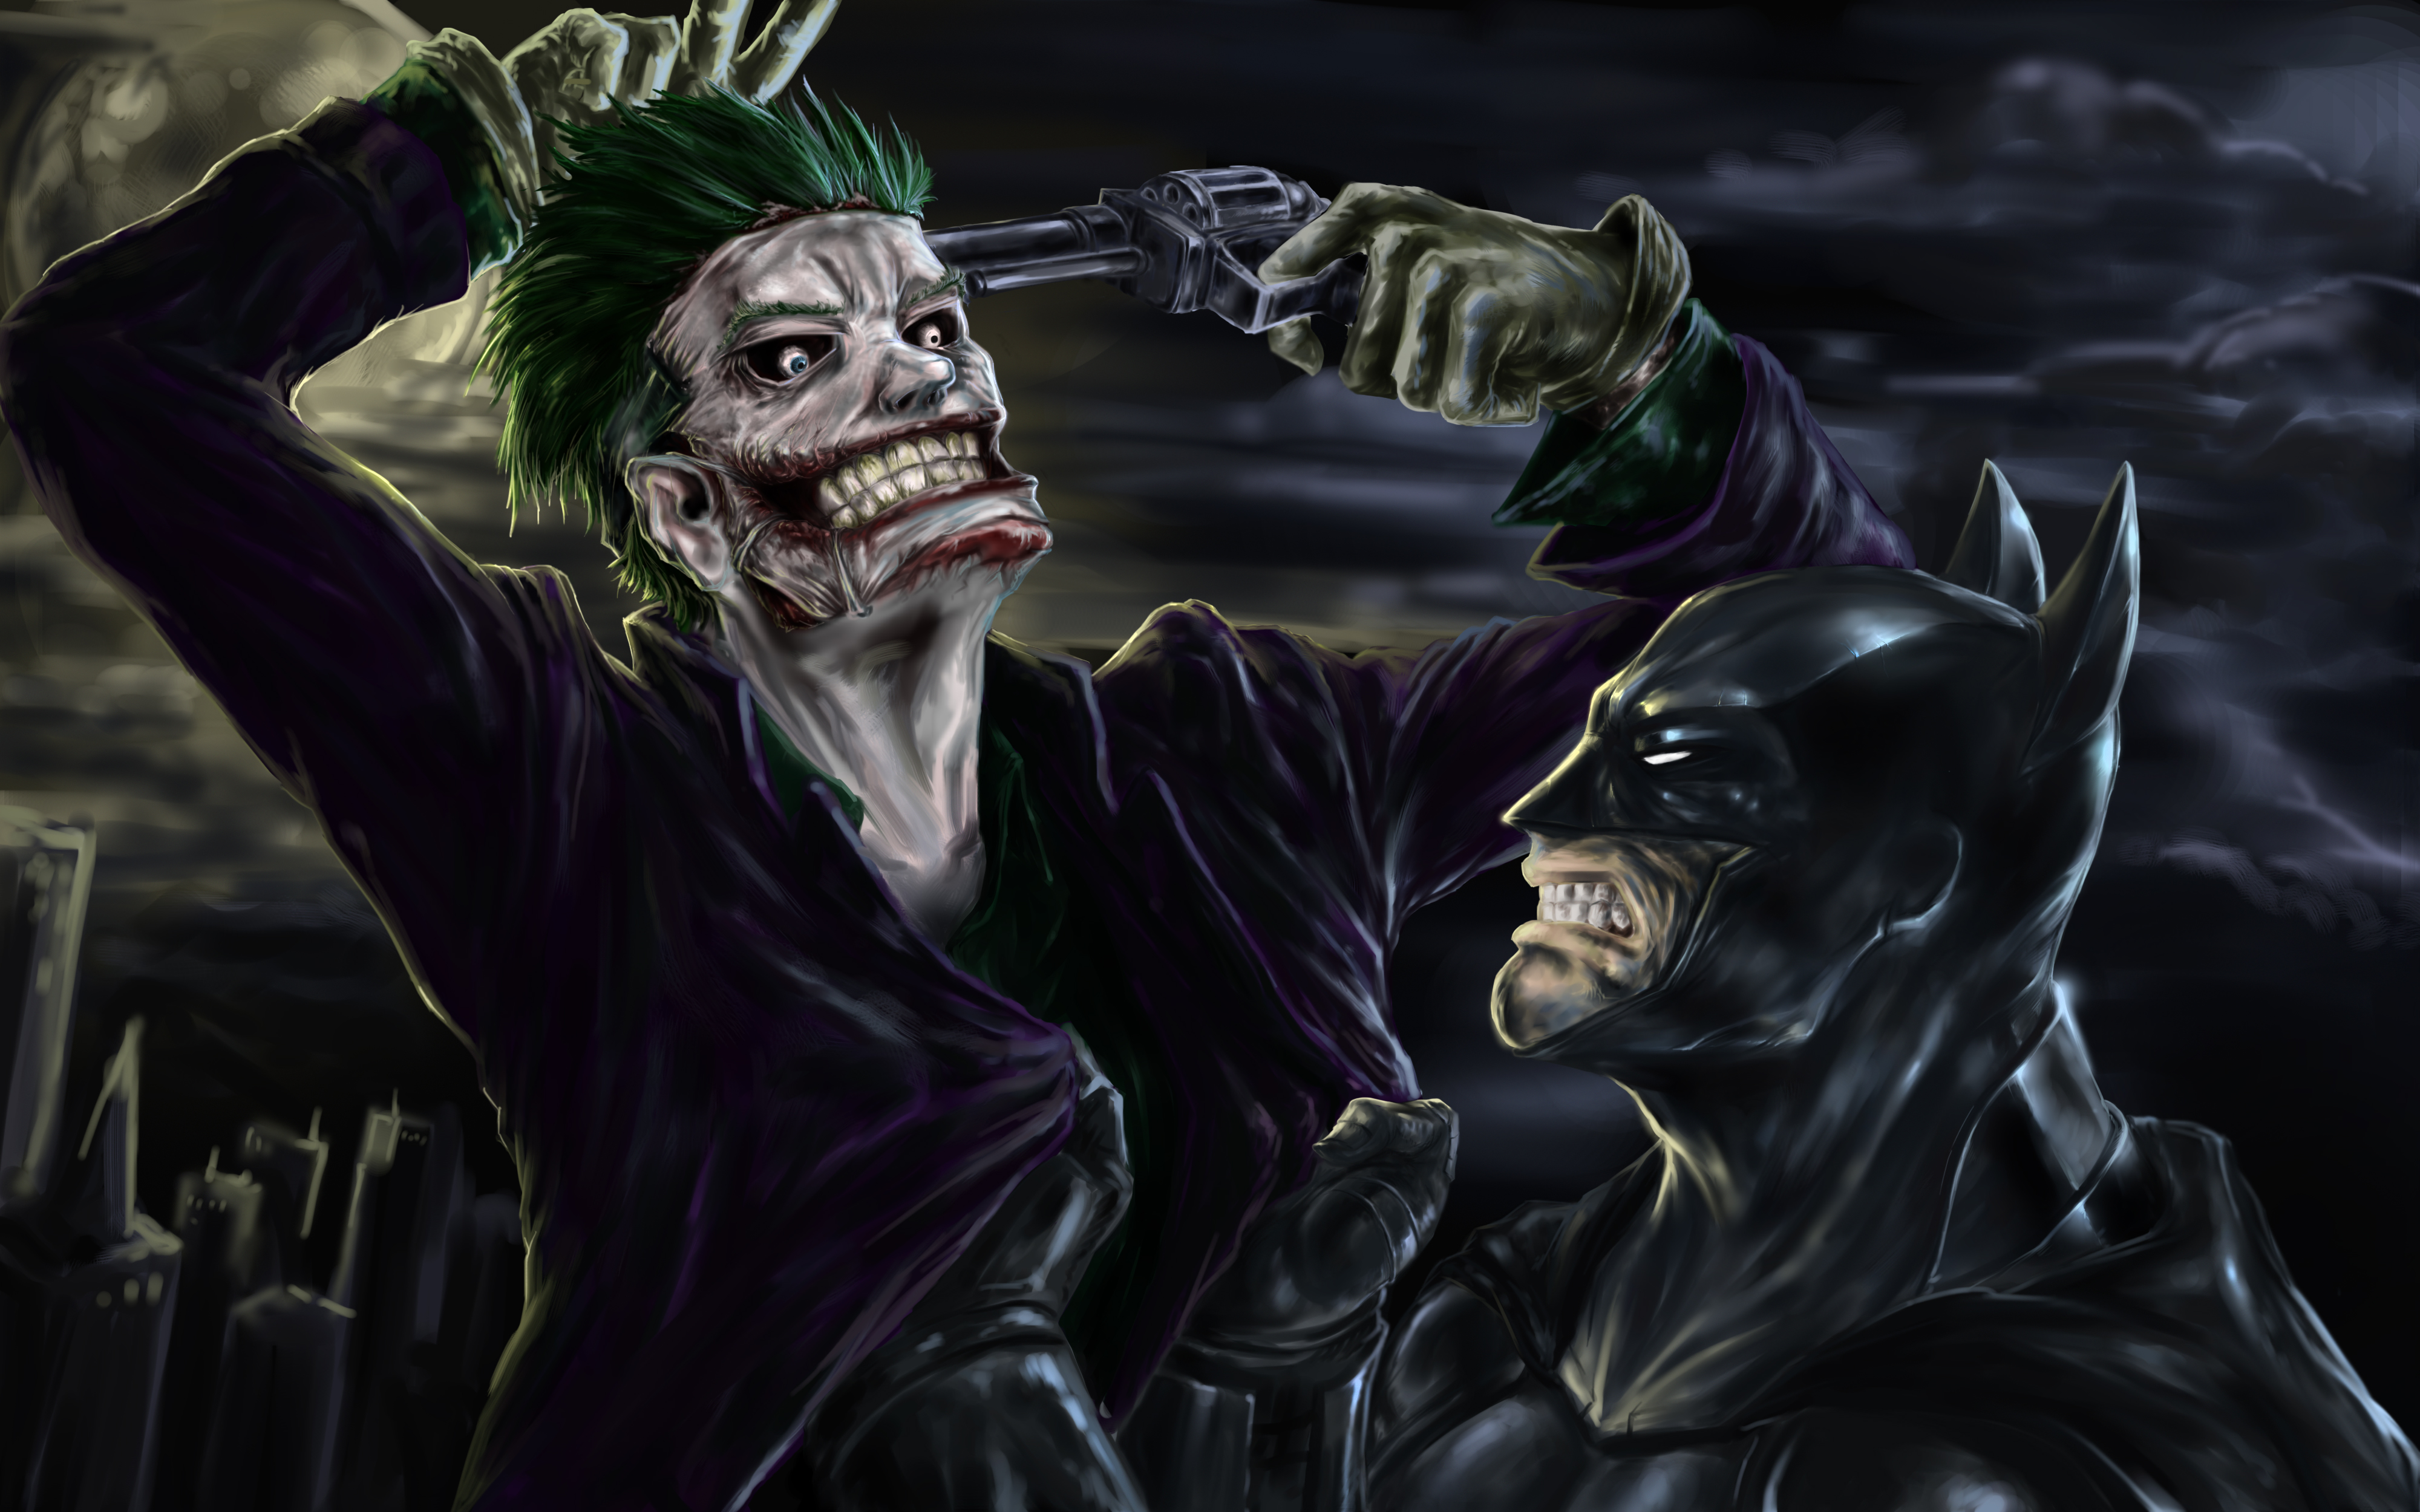  Batman  And Joker 4k  HD Superheroes 4k  Wallpapers  Images 